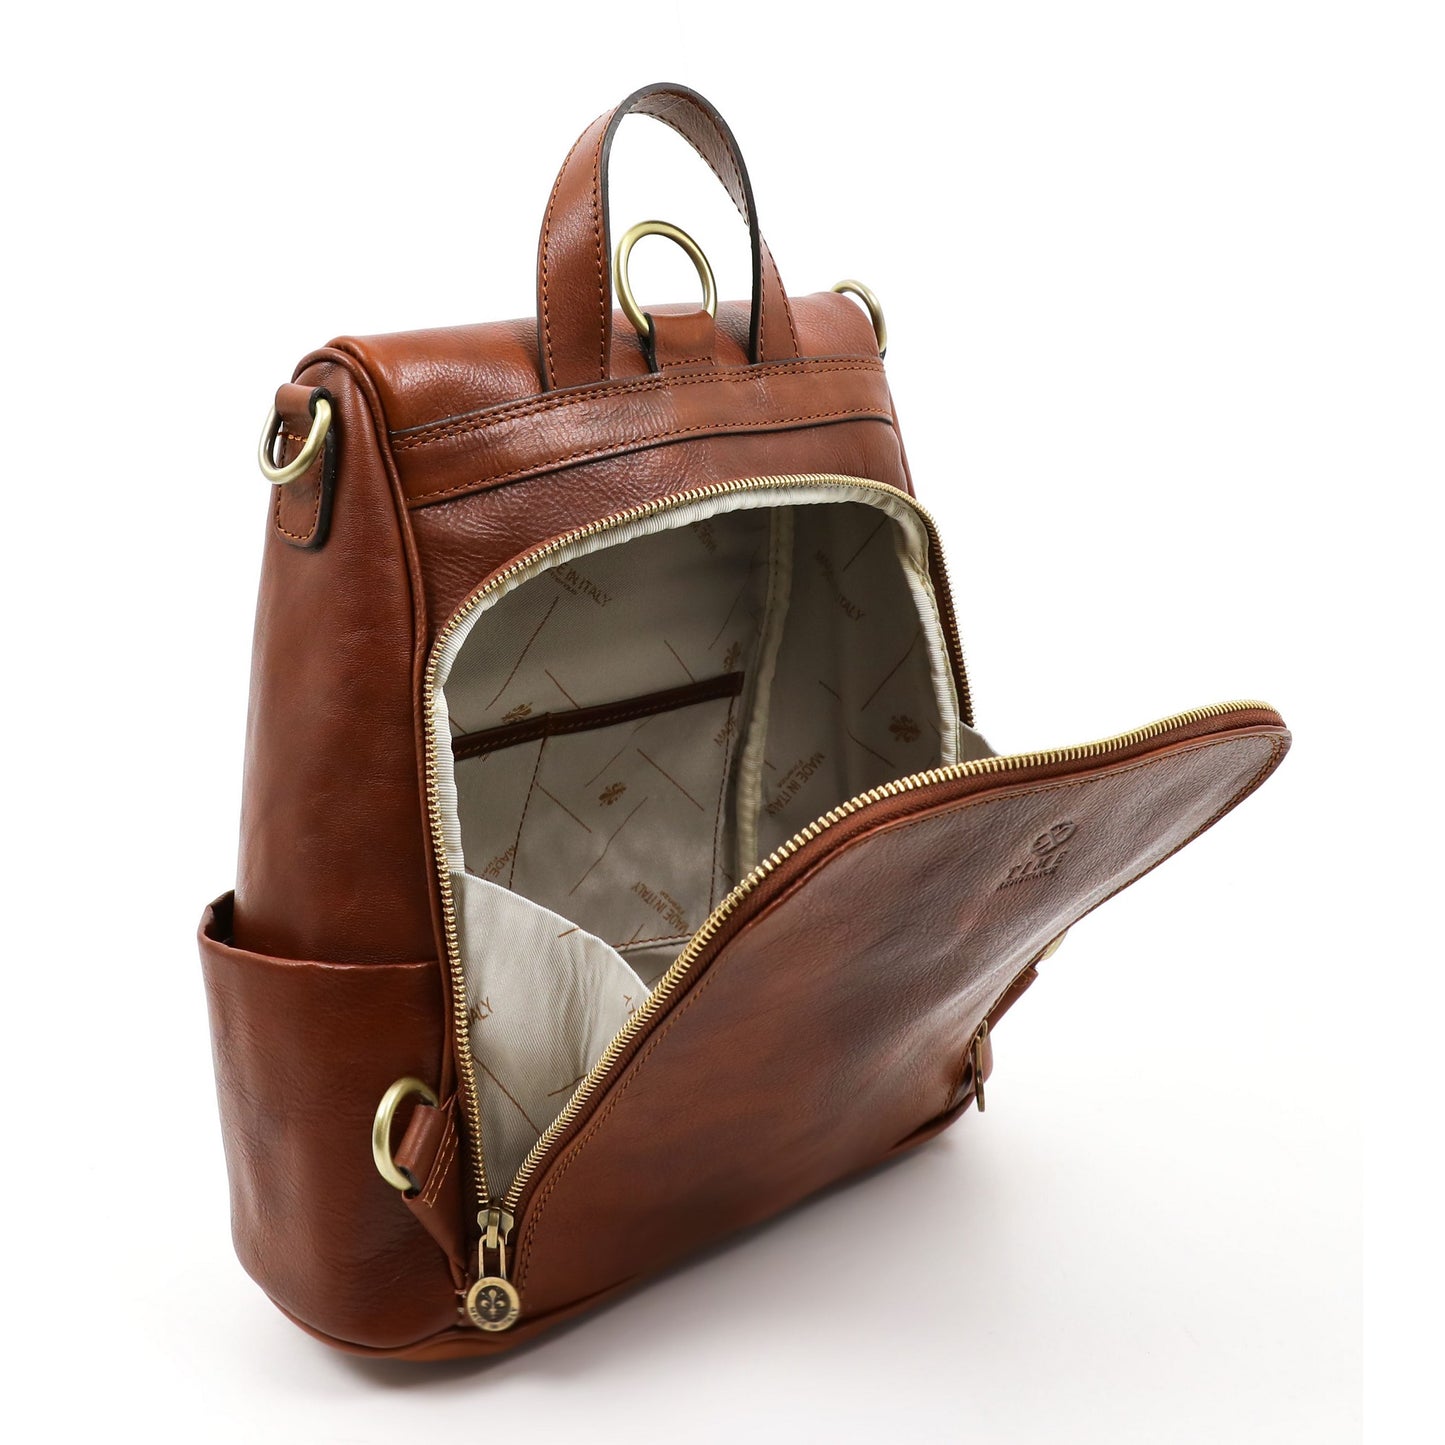 Cognac Brown Leather Convertible Backpack Shoulder Bag - The Waves